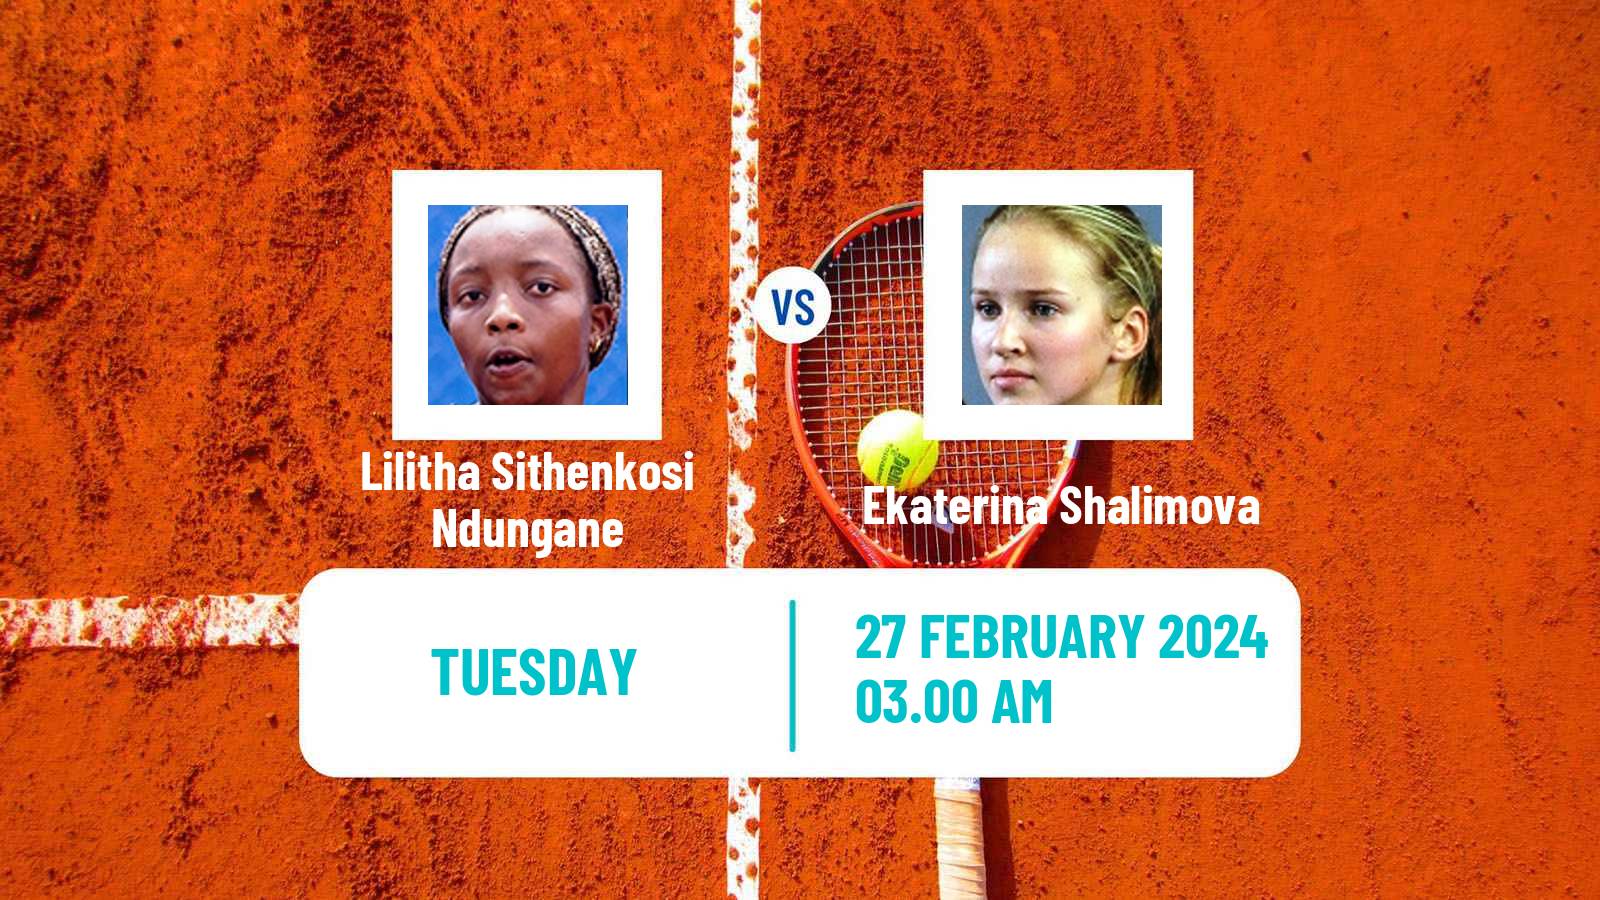 Tennis ITF W50 Pretoria 2 Women Lilitha Sithenkosi Ndungane - Ekaterina Shalimova